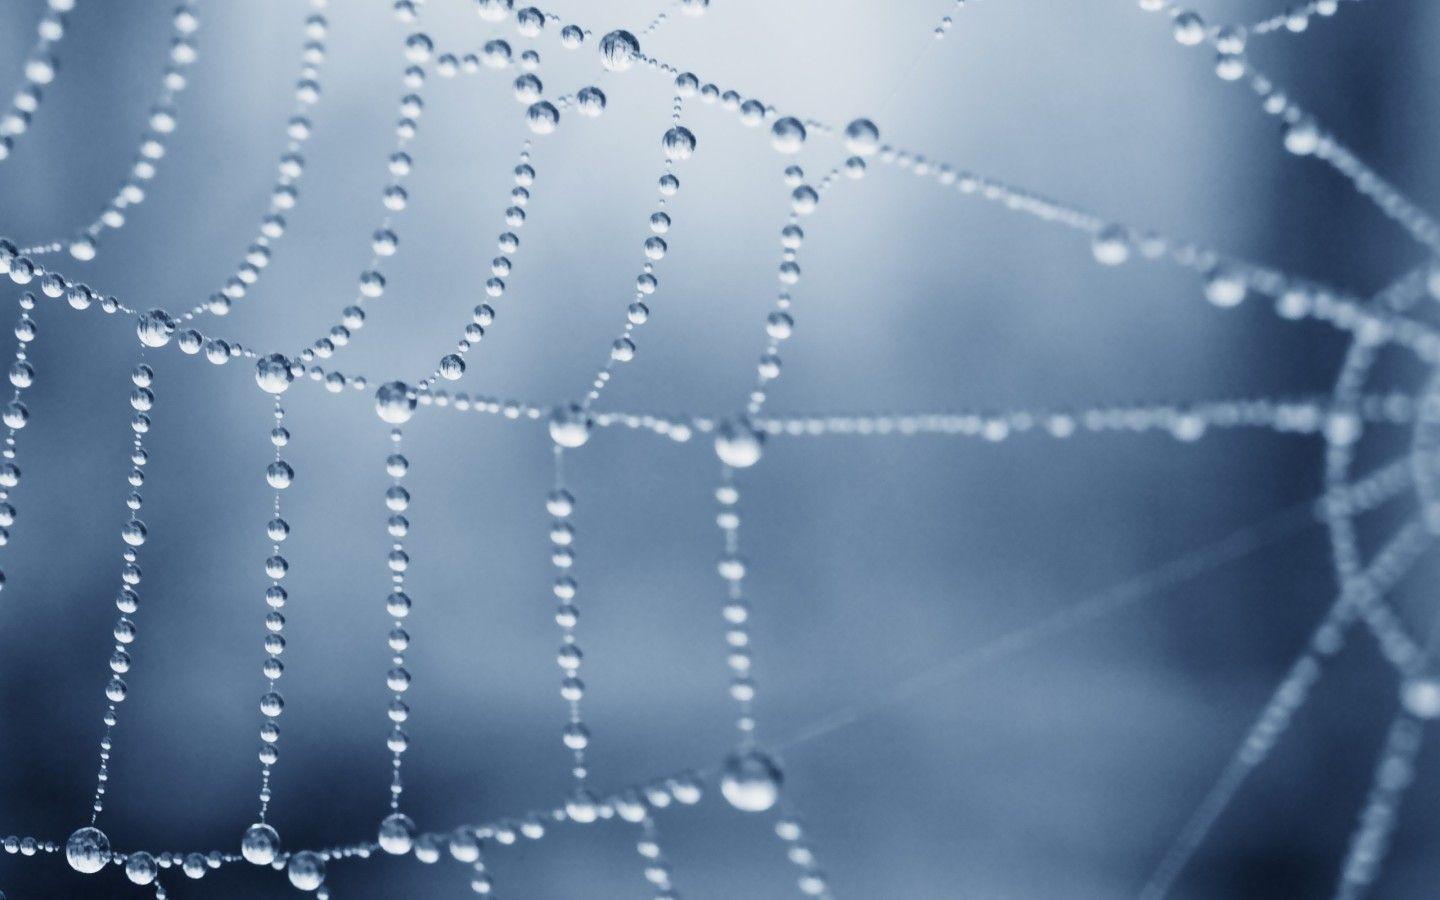 Wet Spider Web widescreen wallpaper. Wide